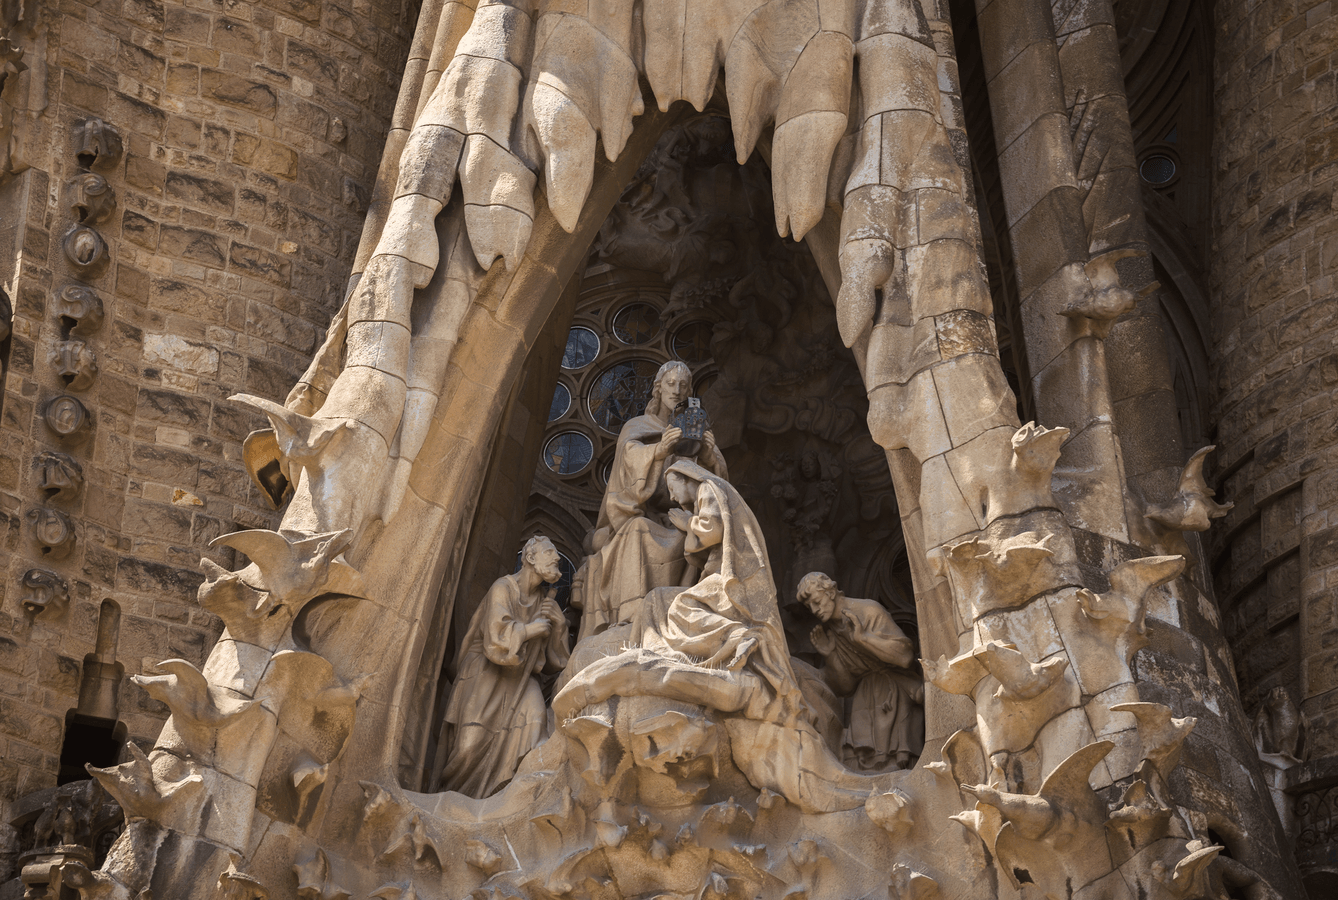 Sagrada Familia by Gaudi - Basilica in Barcelona, Spain - 137 Year Project 20